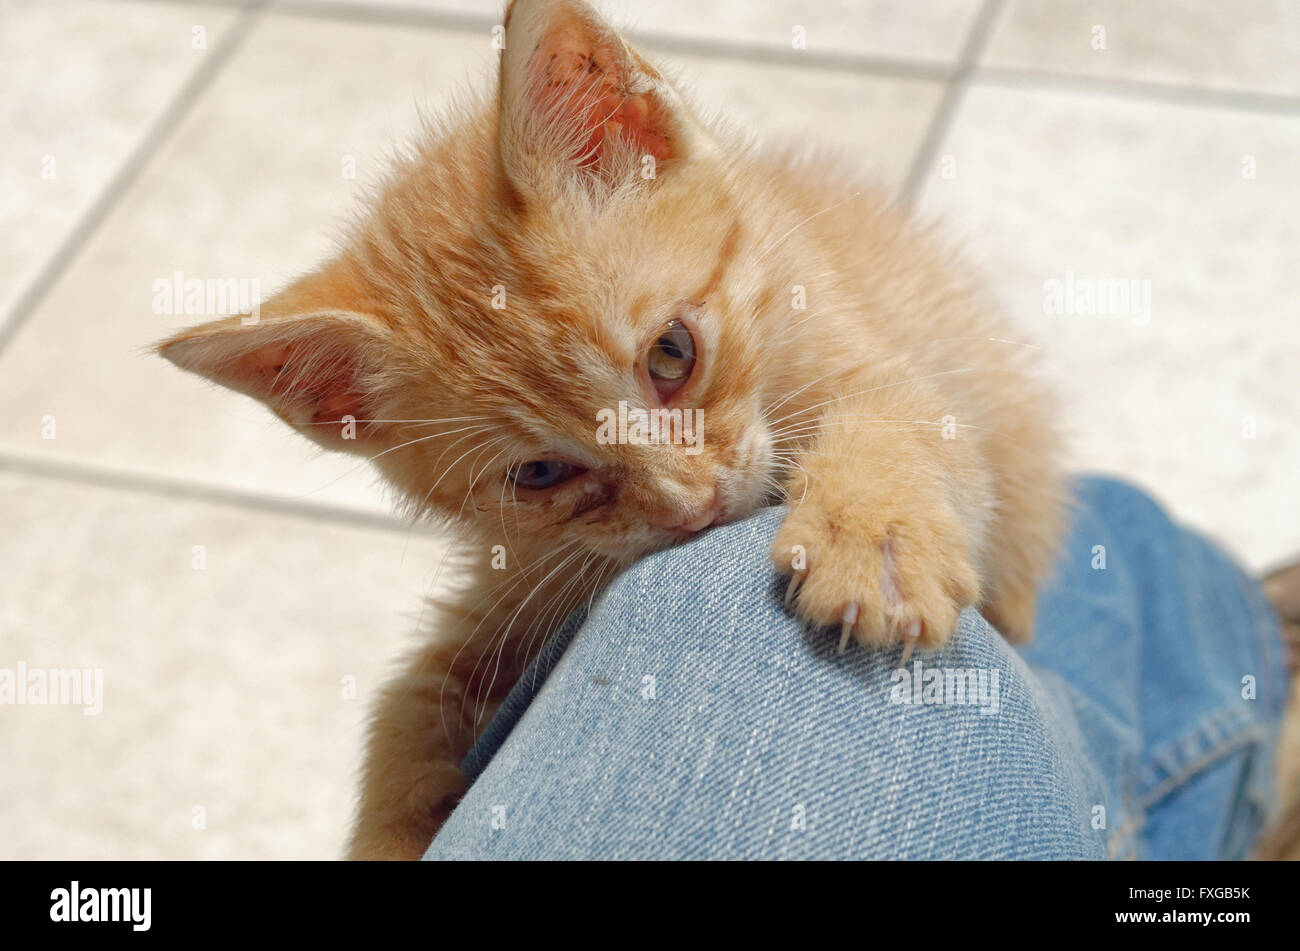 abandoned baby cat saved Stock Photo